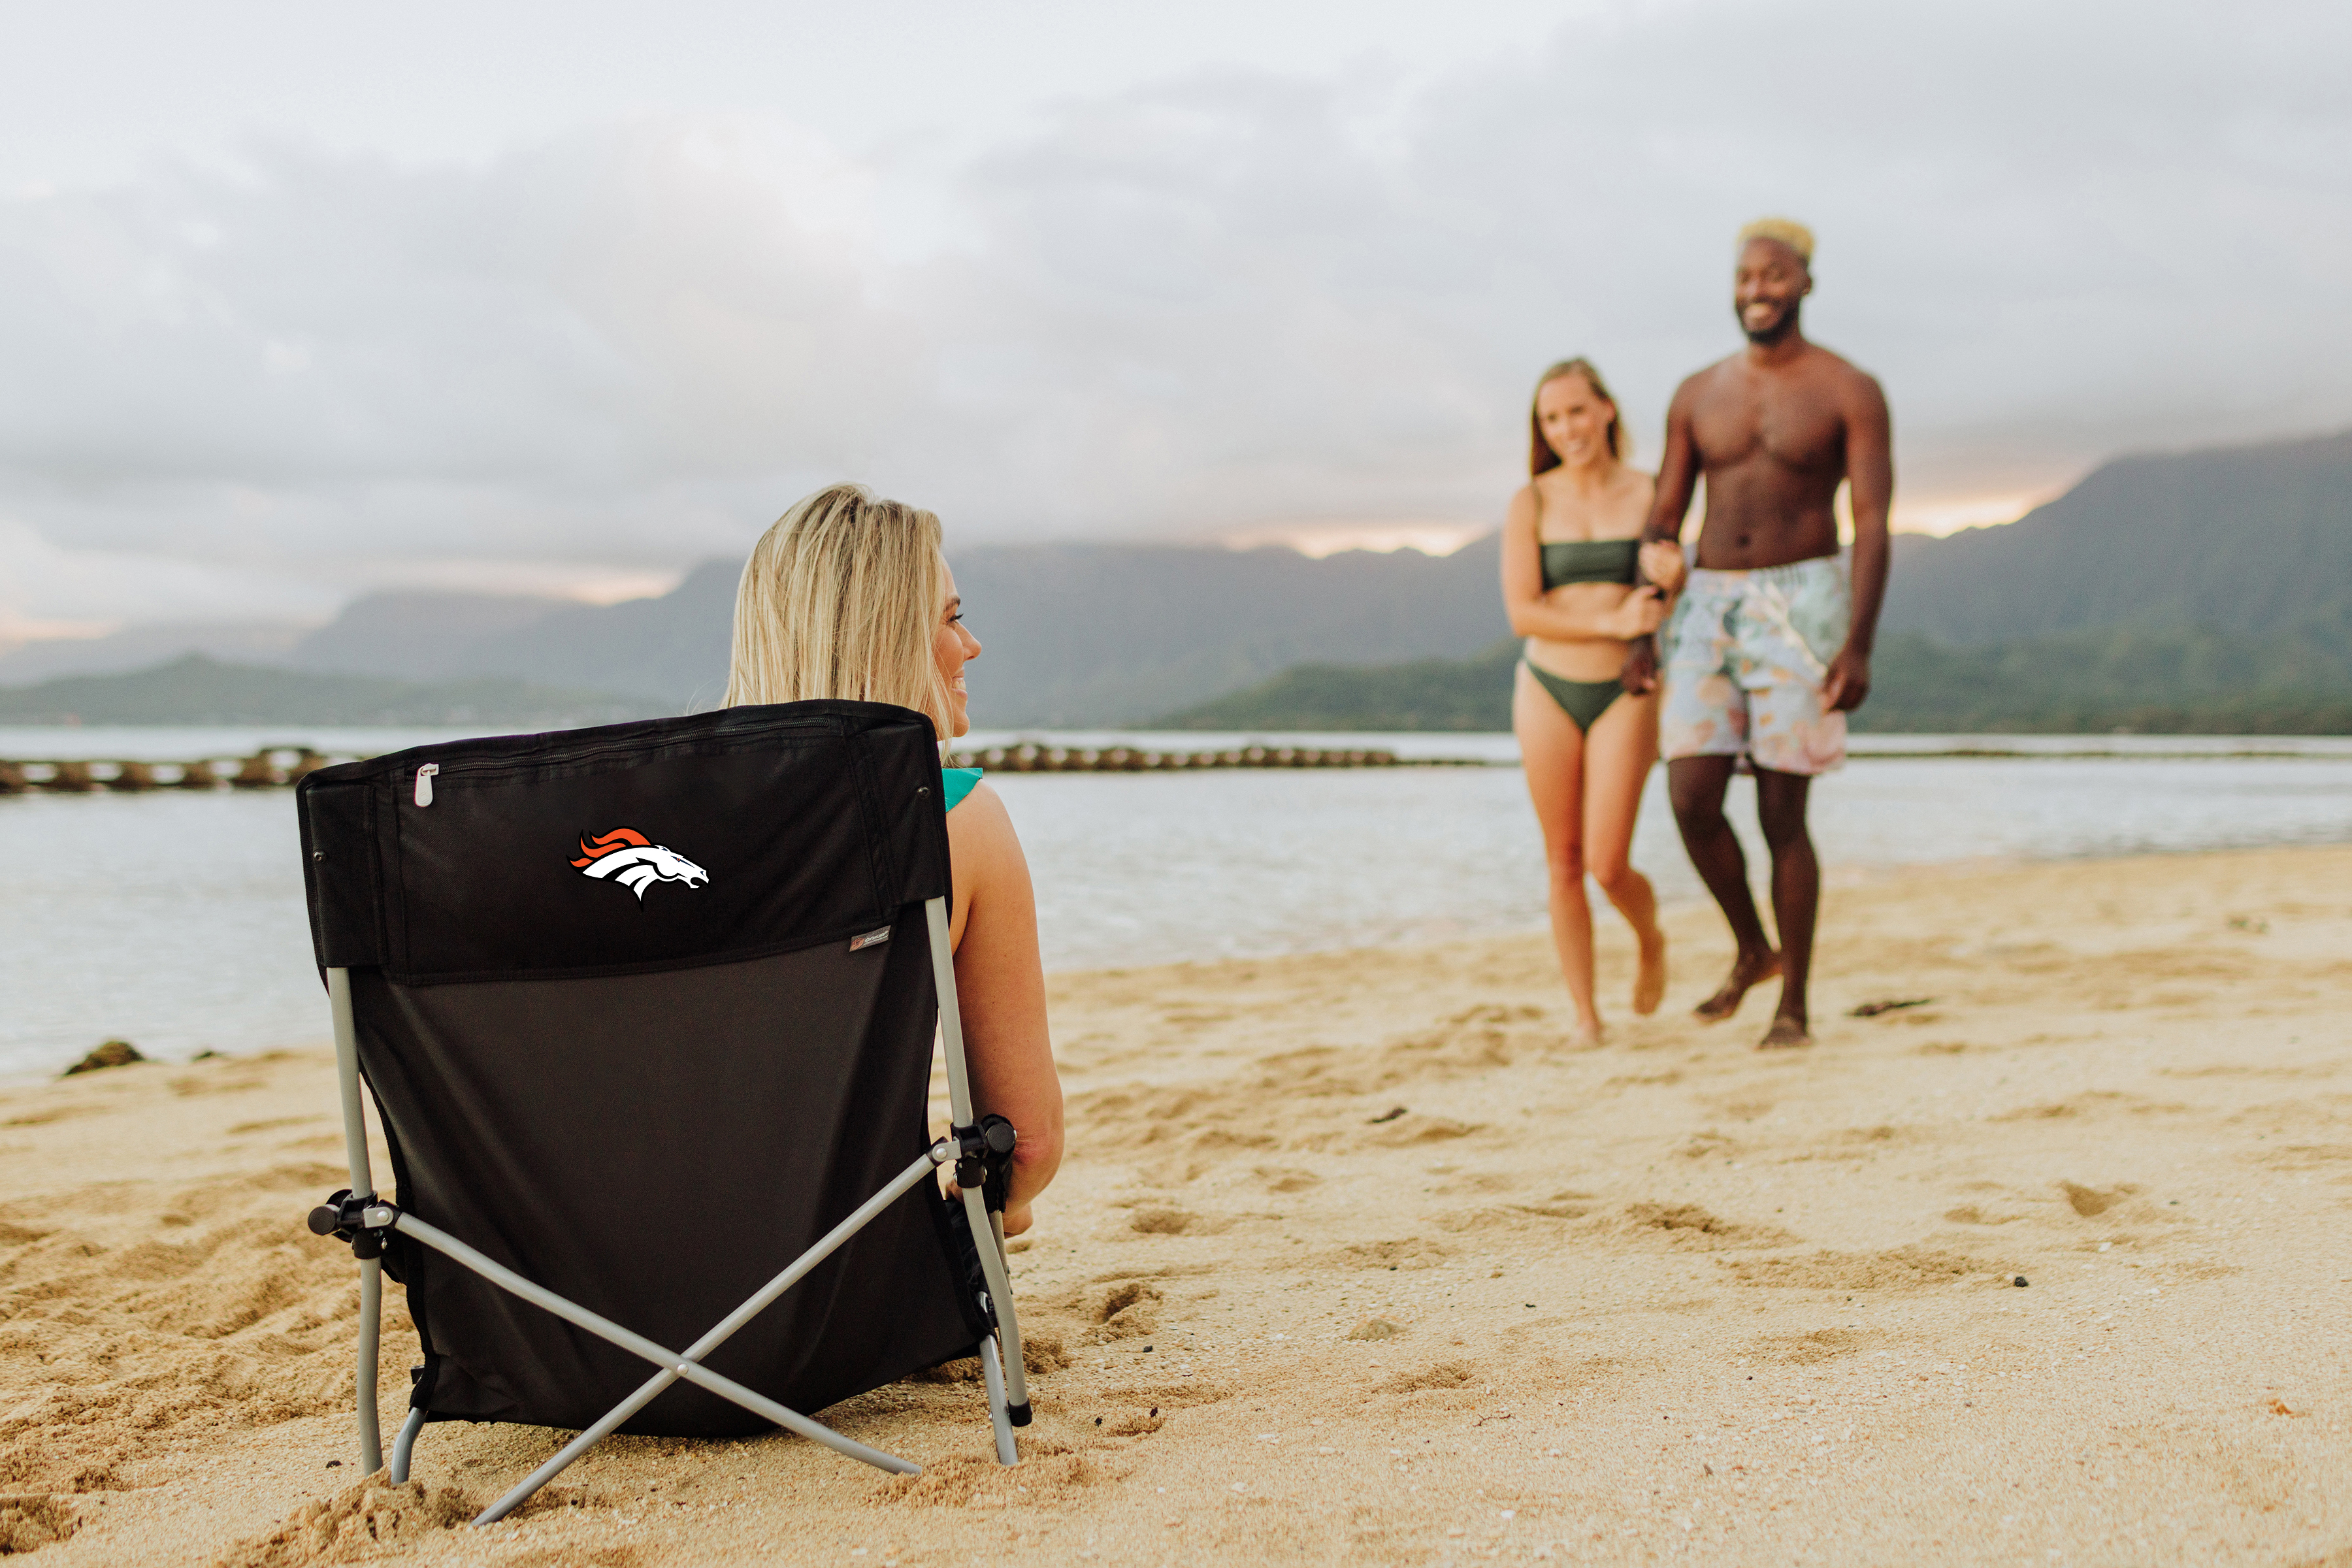 Denver Broncos - Tranquility Beach Chair with Carry Bag